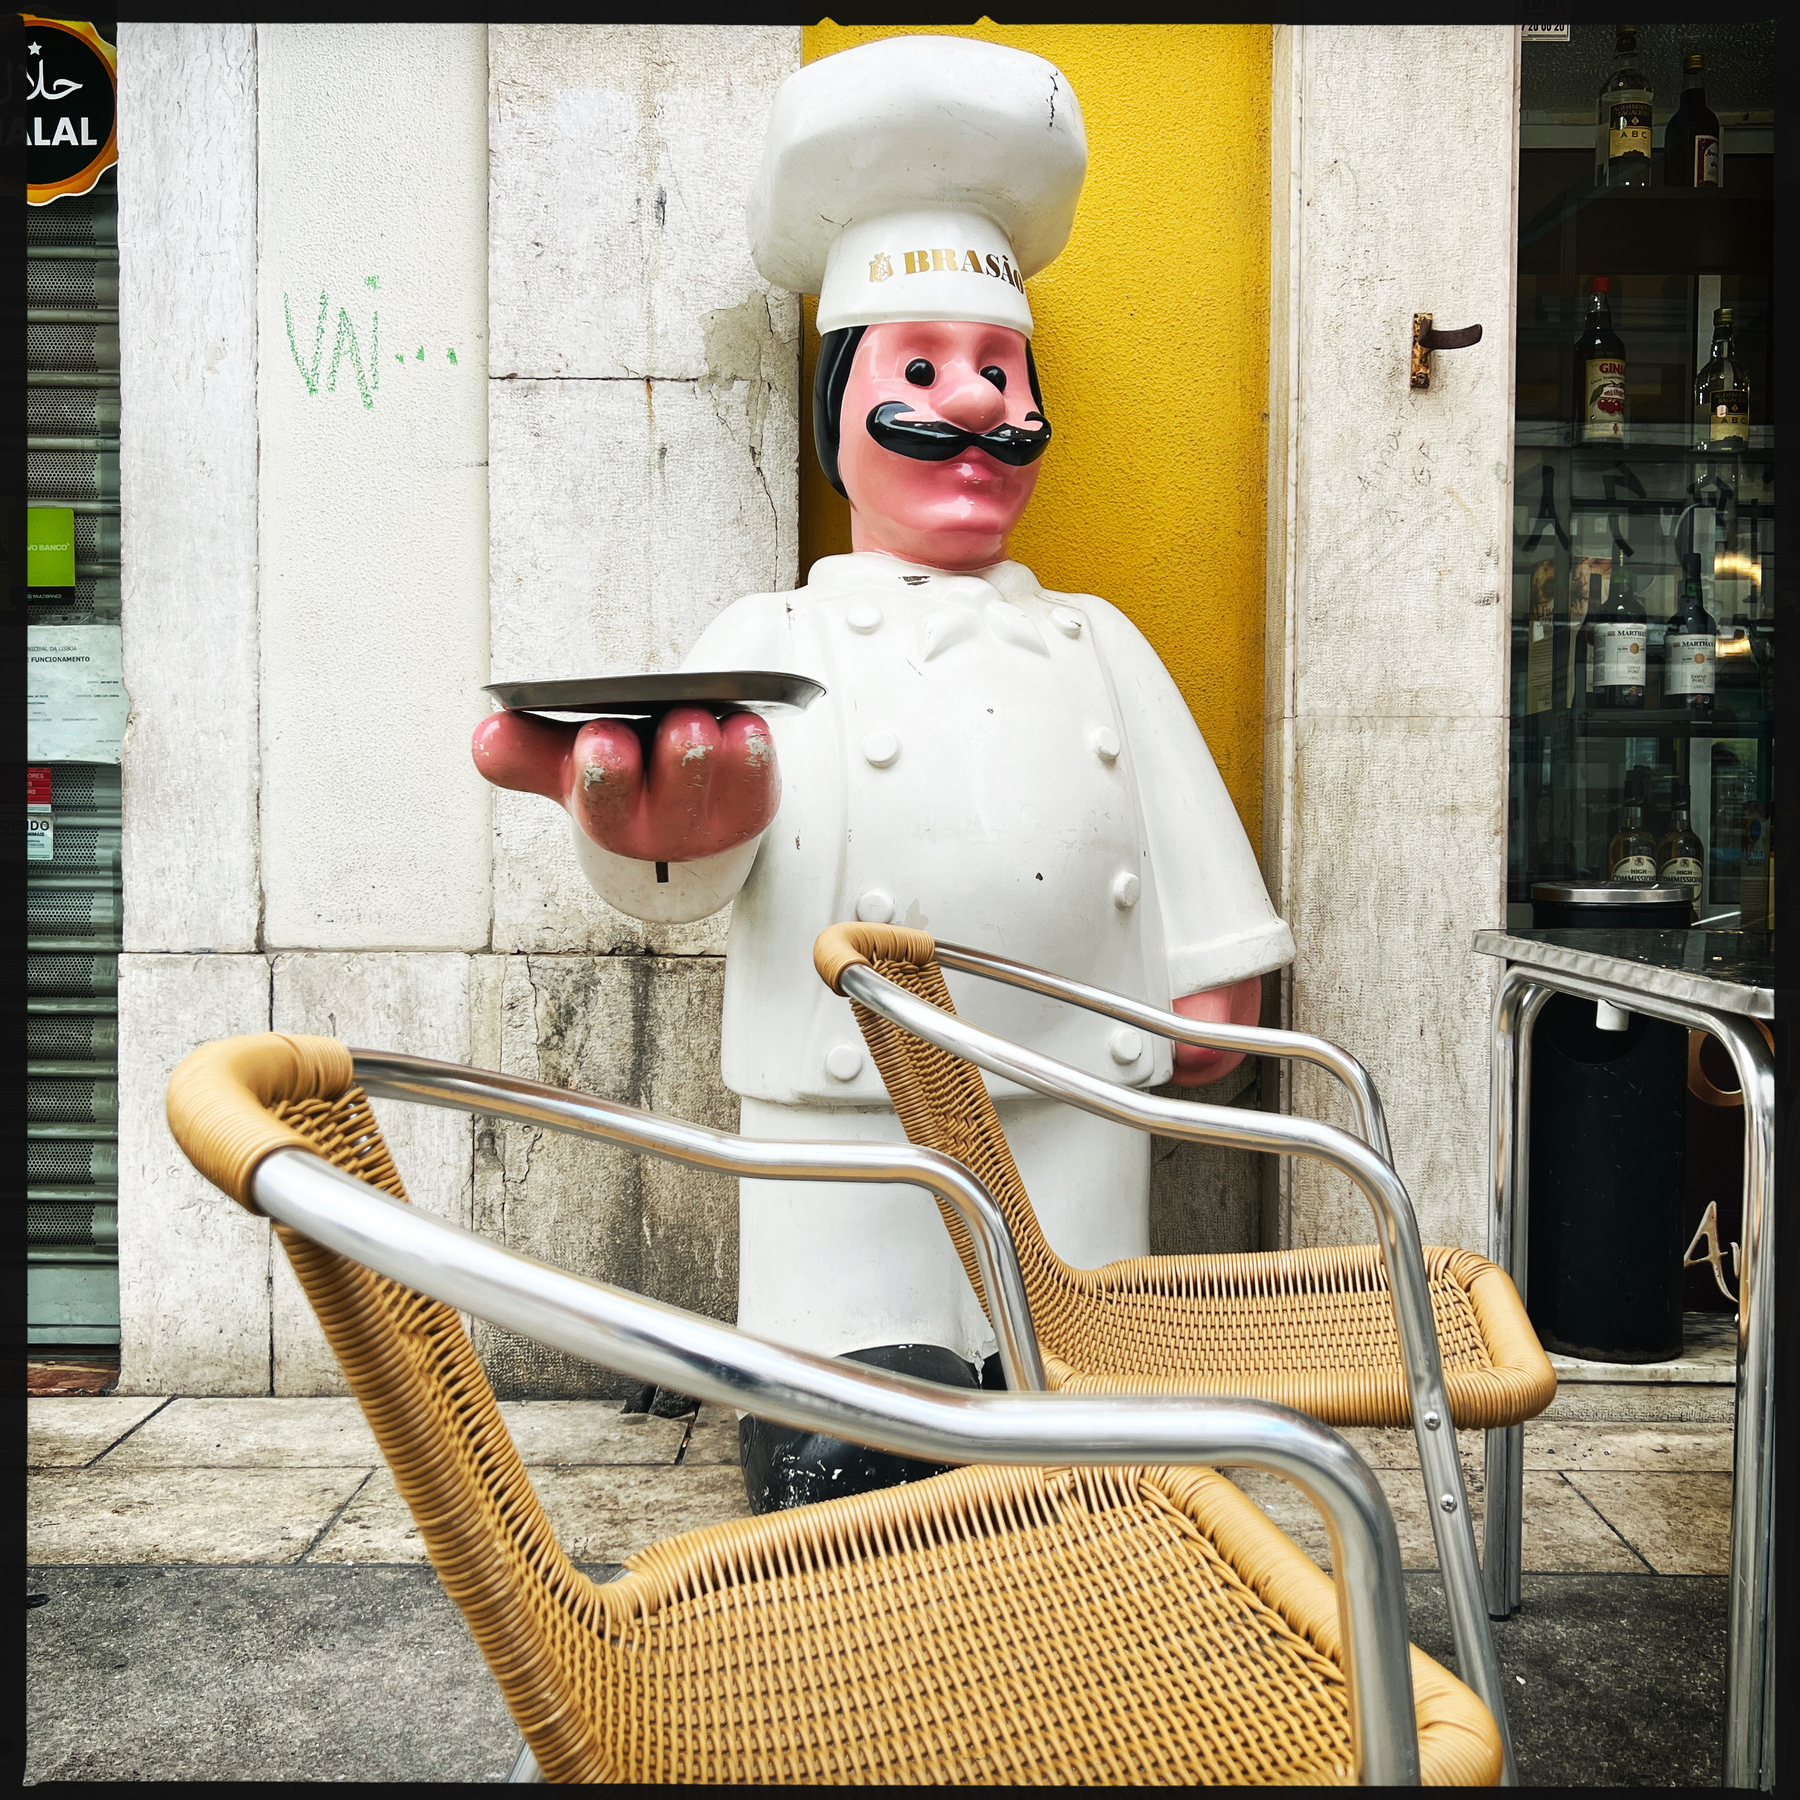 A chef’s doll outside a café.